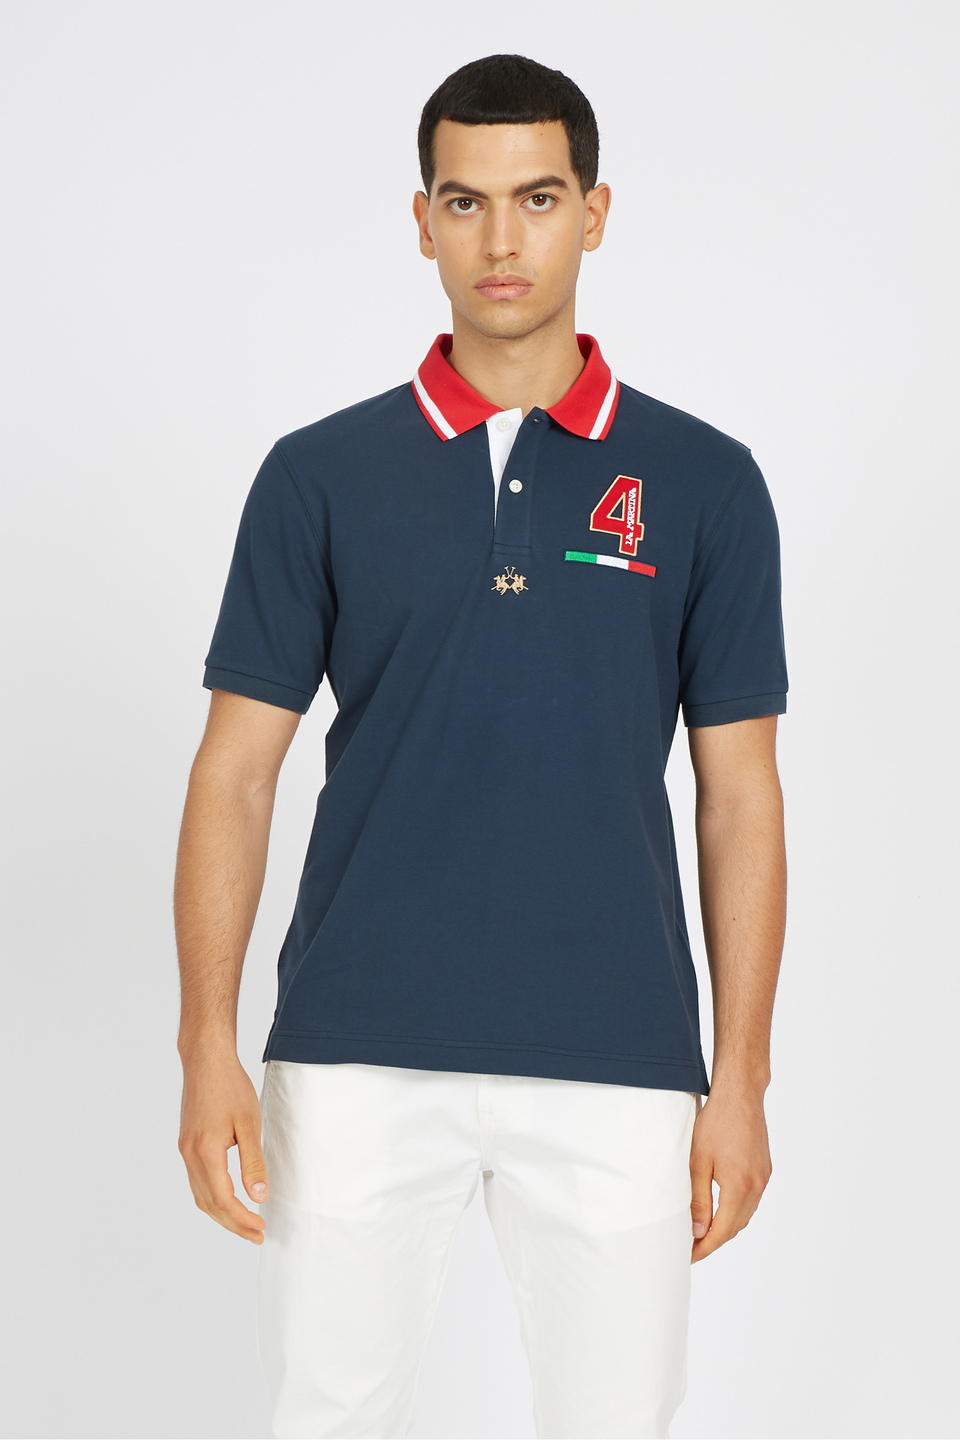 Herren-Kurzarm-Poloshirt aus Stretch-Baumwolle mit normaler Passform - Van | La Martina - Official Online Shop